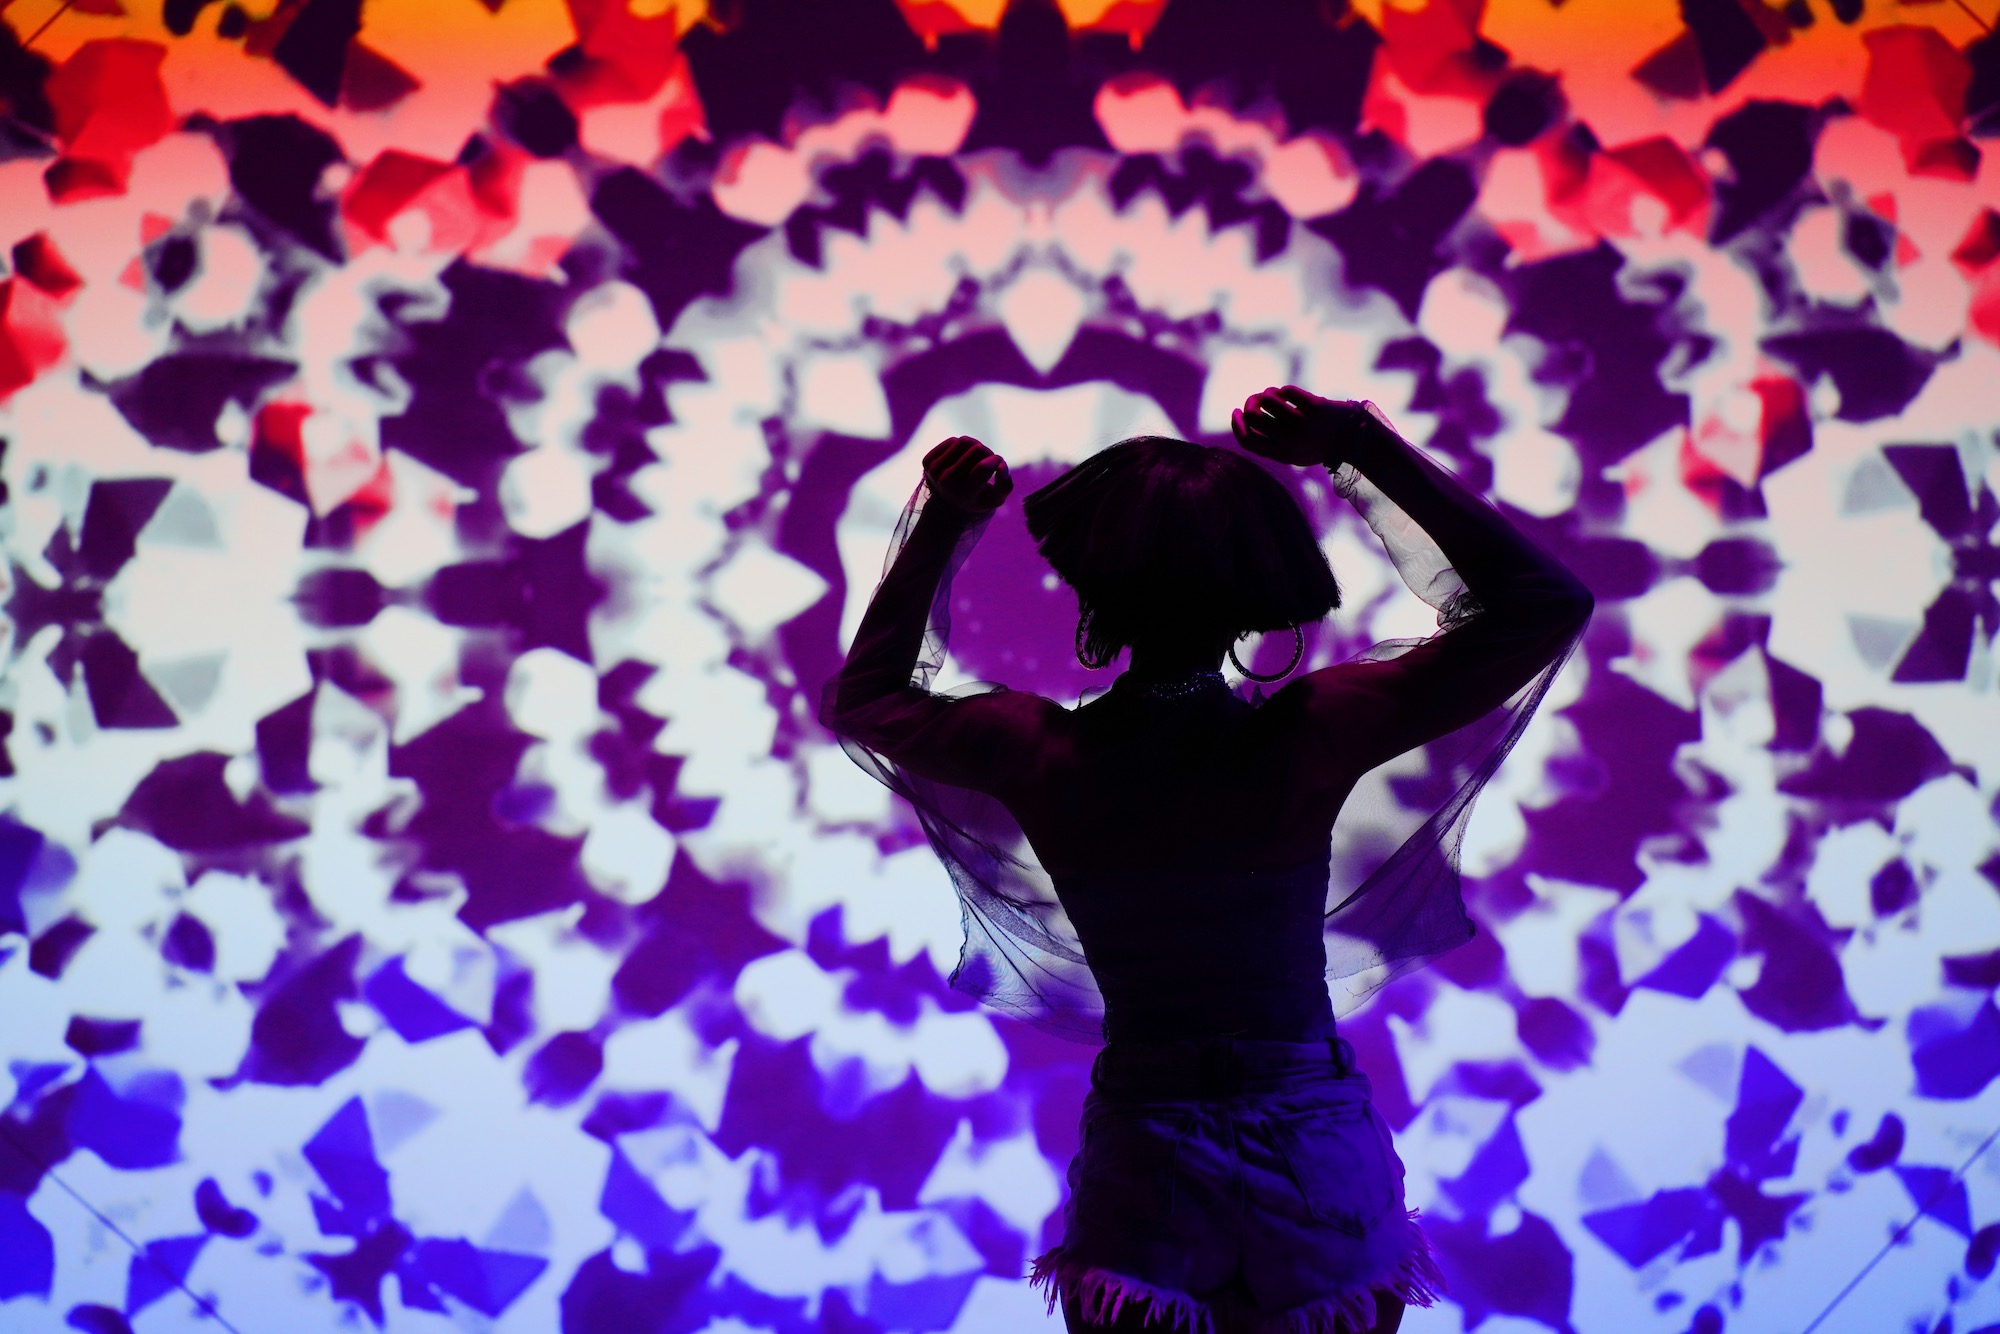 a woman dancing in front of a wild tie-dye screen